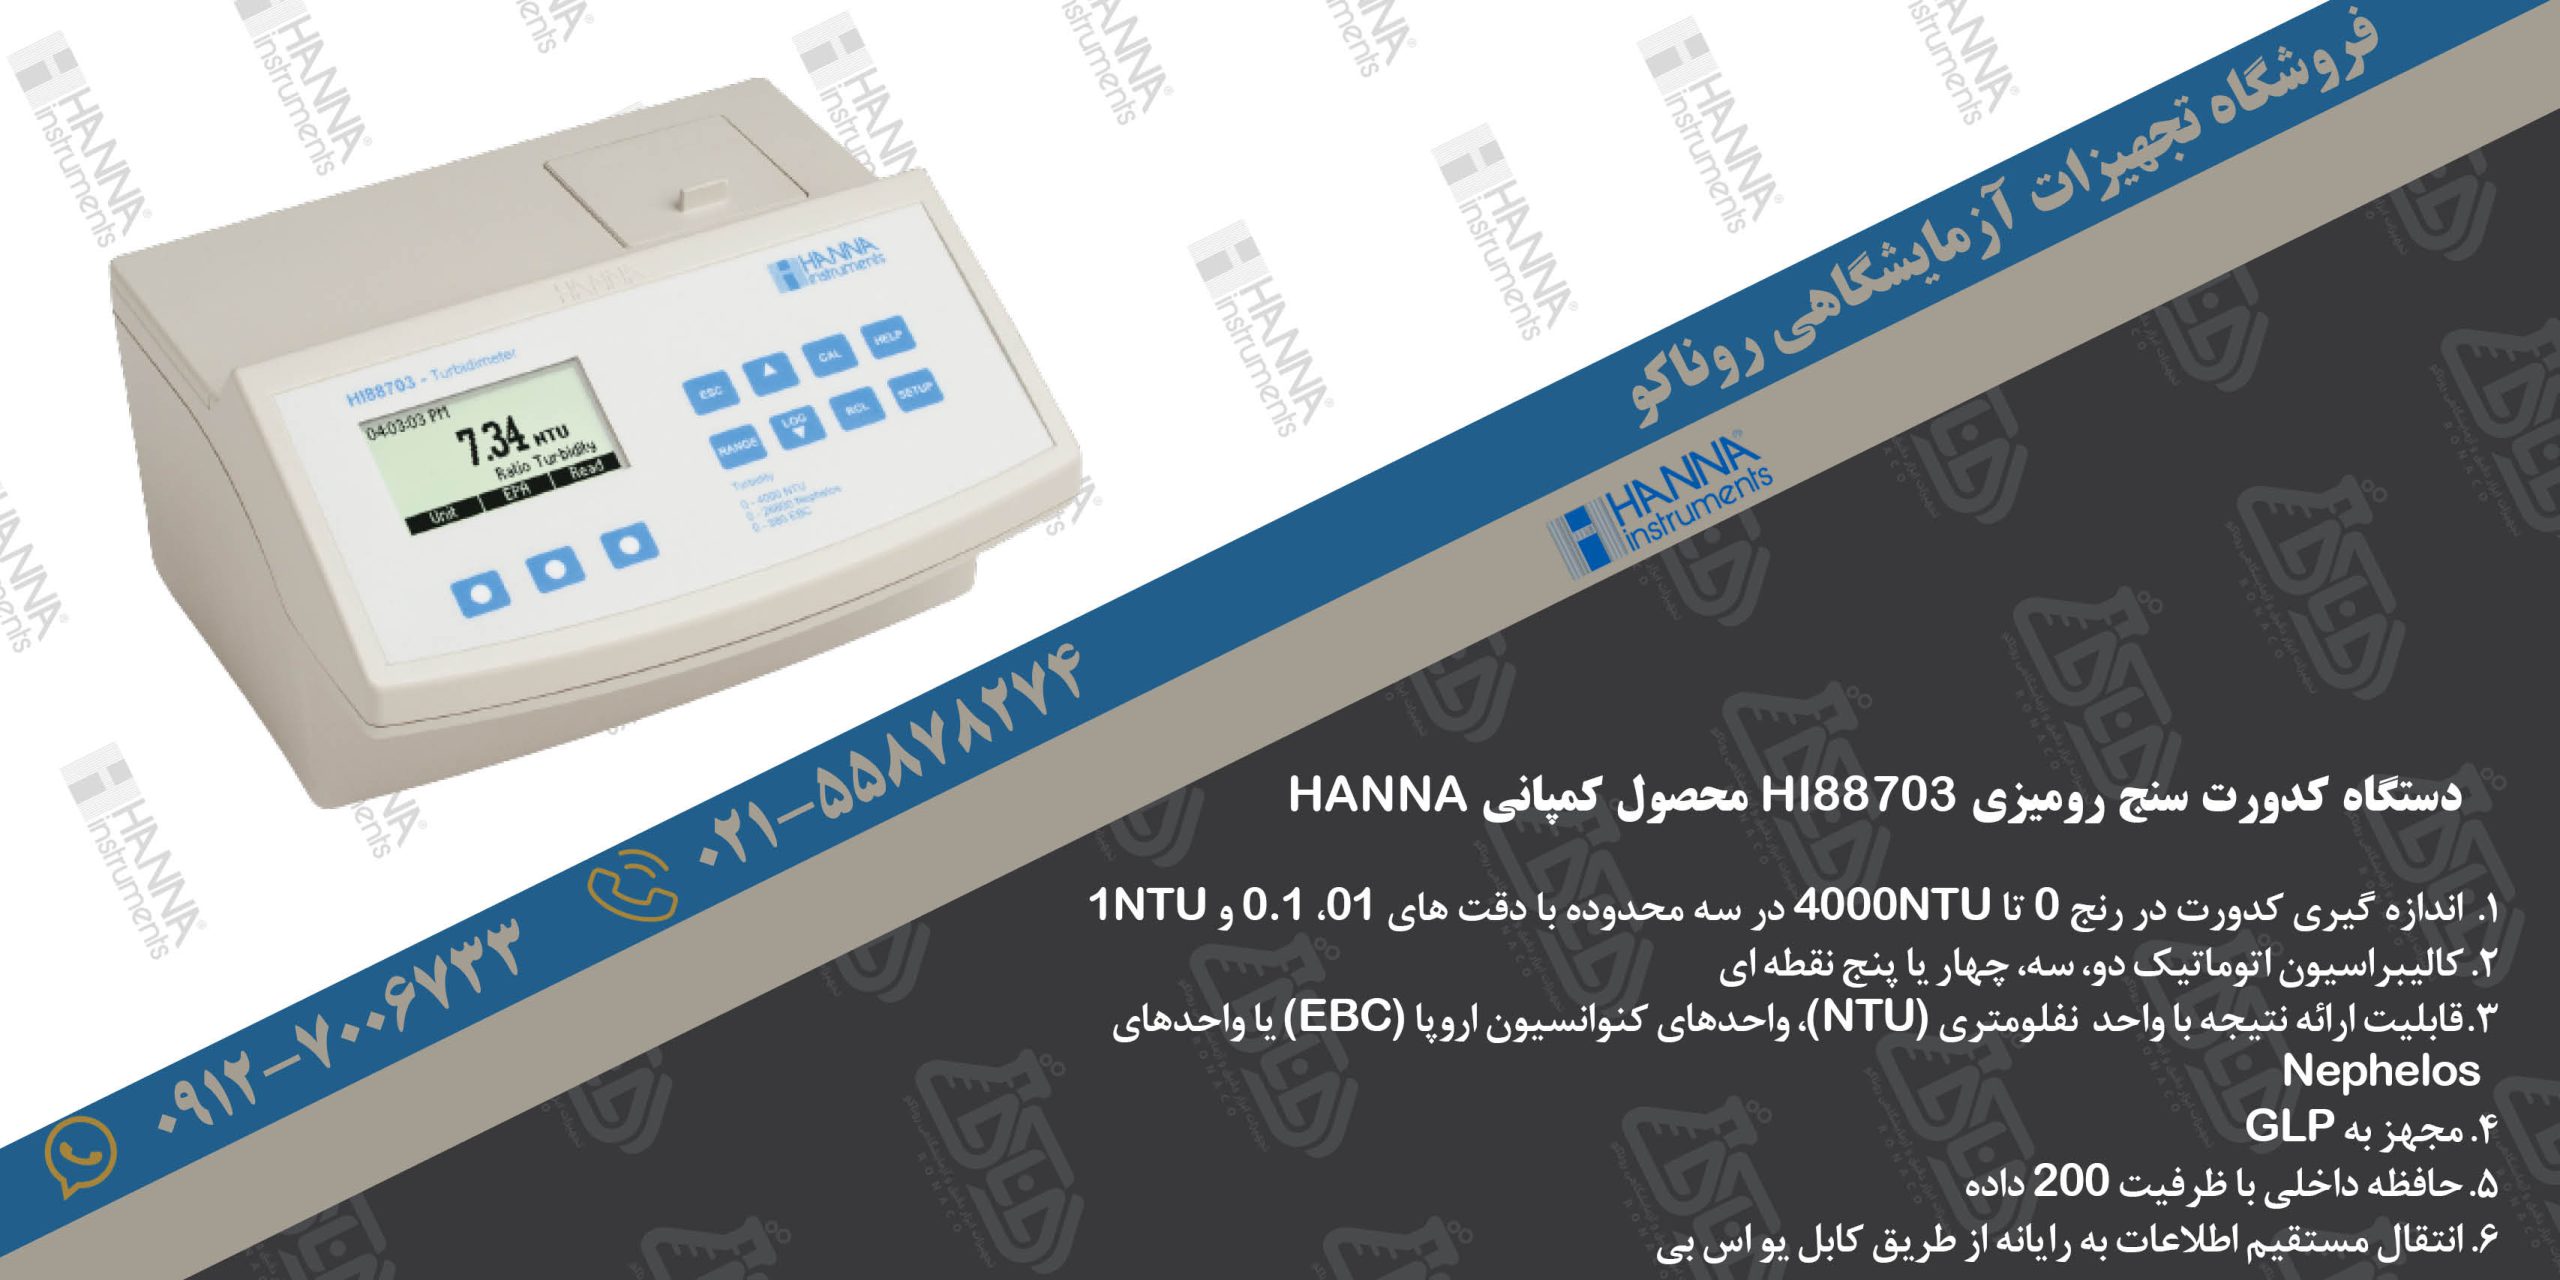 بنر دستگاه کدورت سنج رومیزی HI88703 محصول کمپانی HANNA